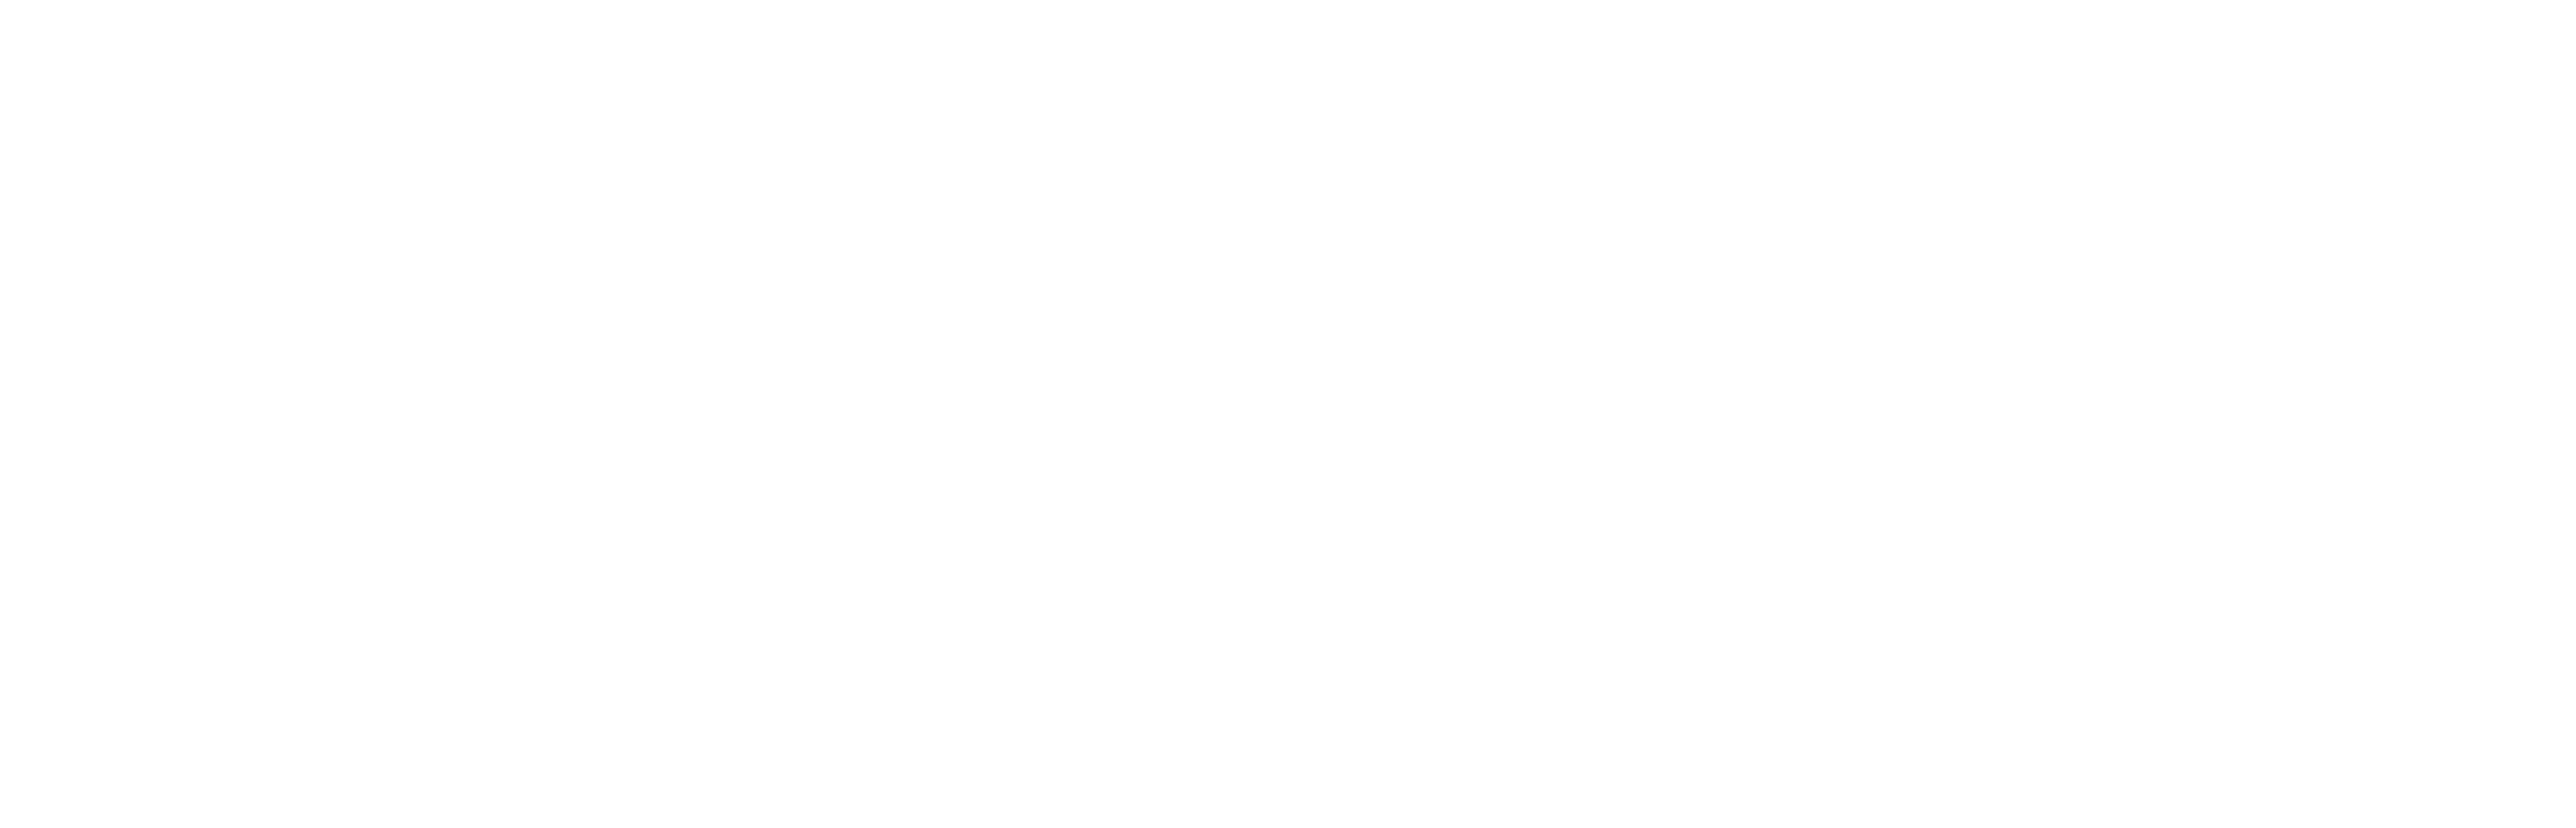 Downtown Owl logo